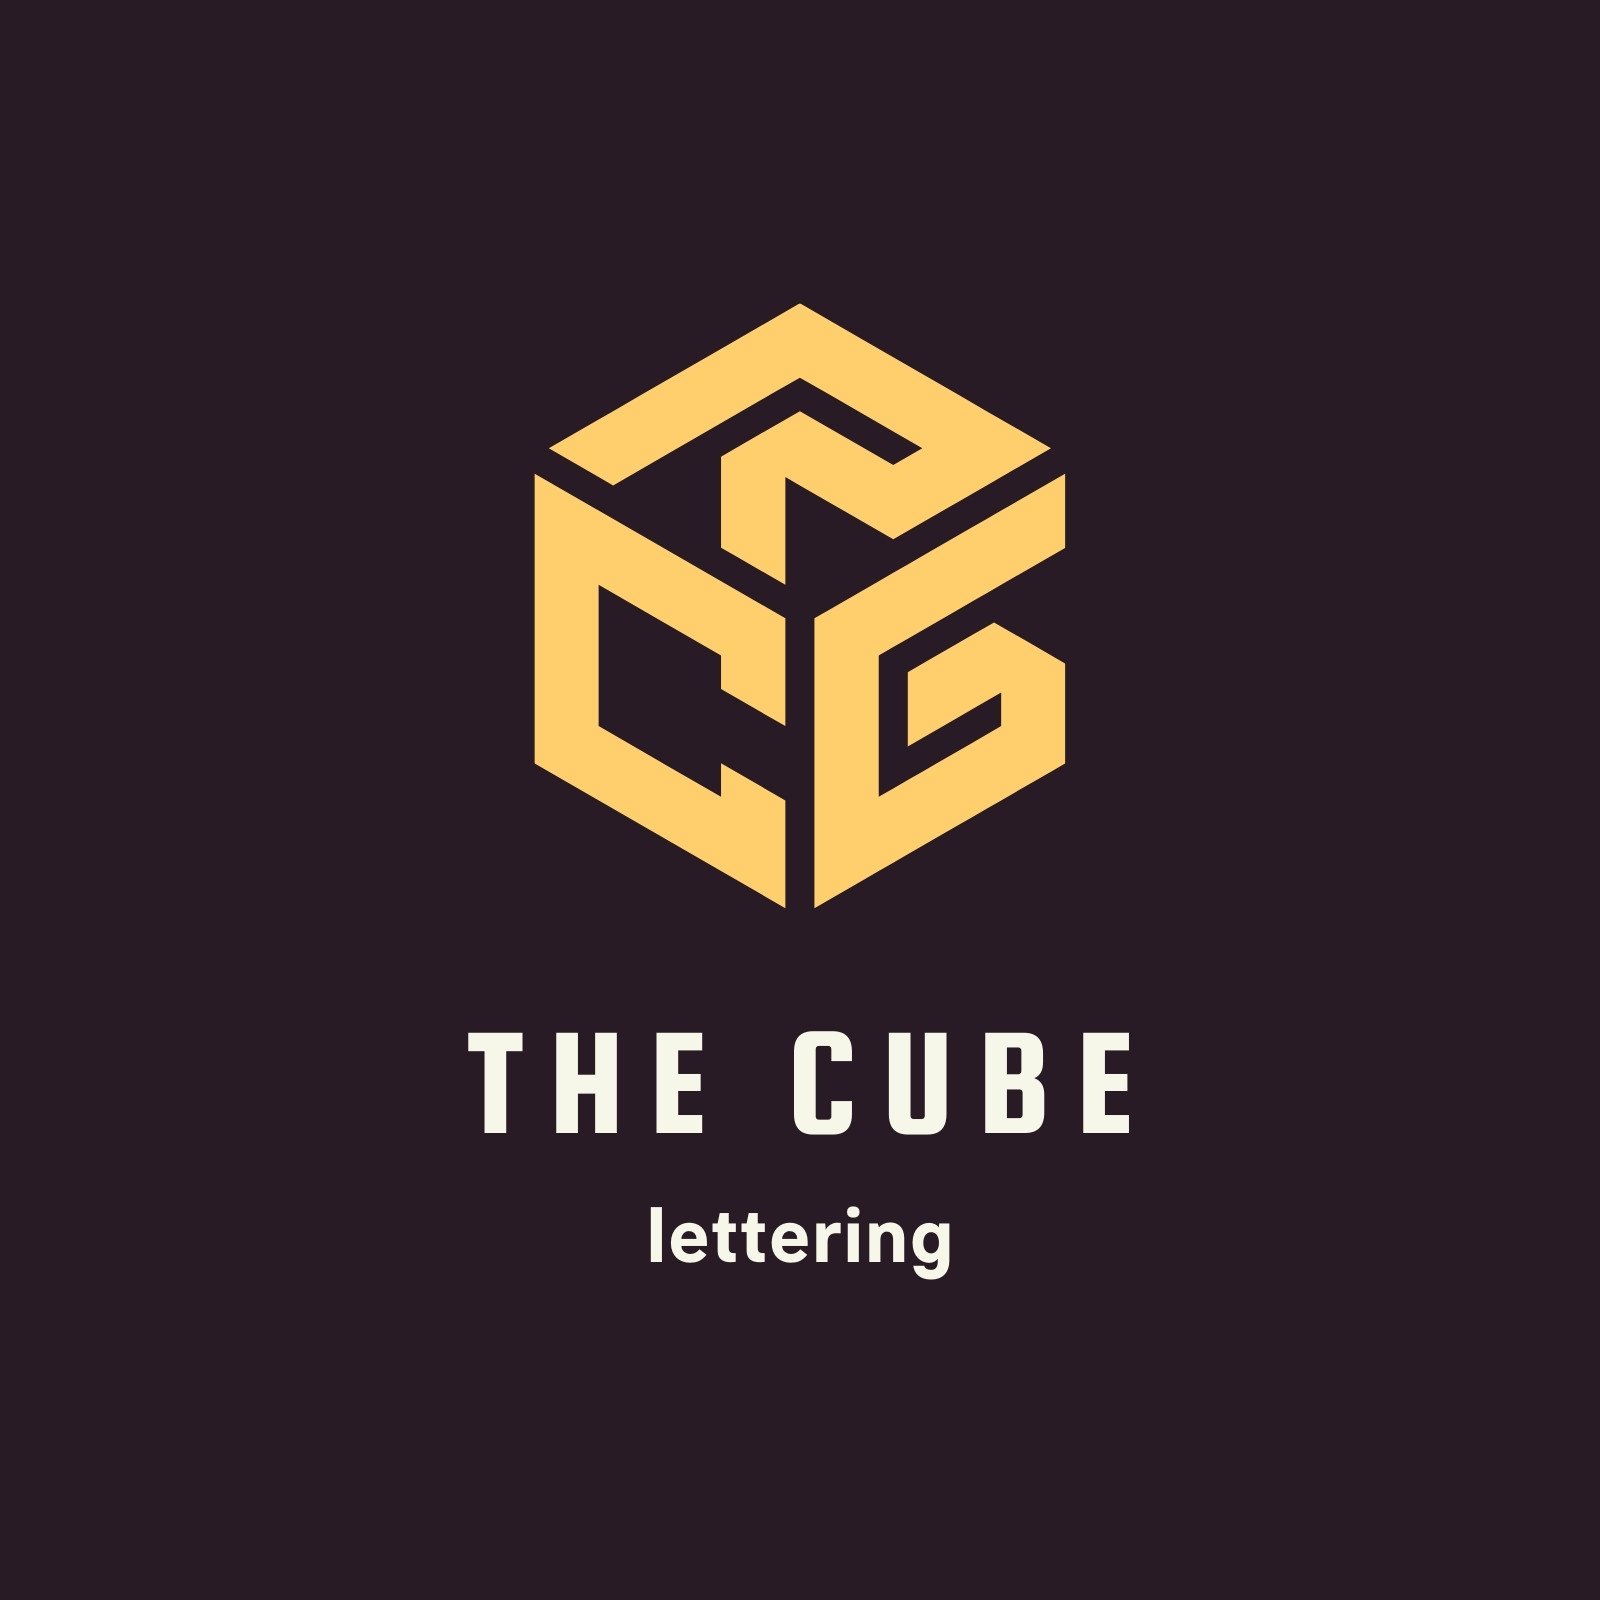 Customize 627+ Letter Logo Templates Online - Canva